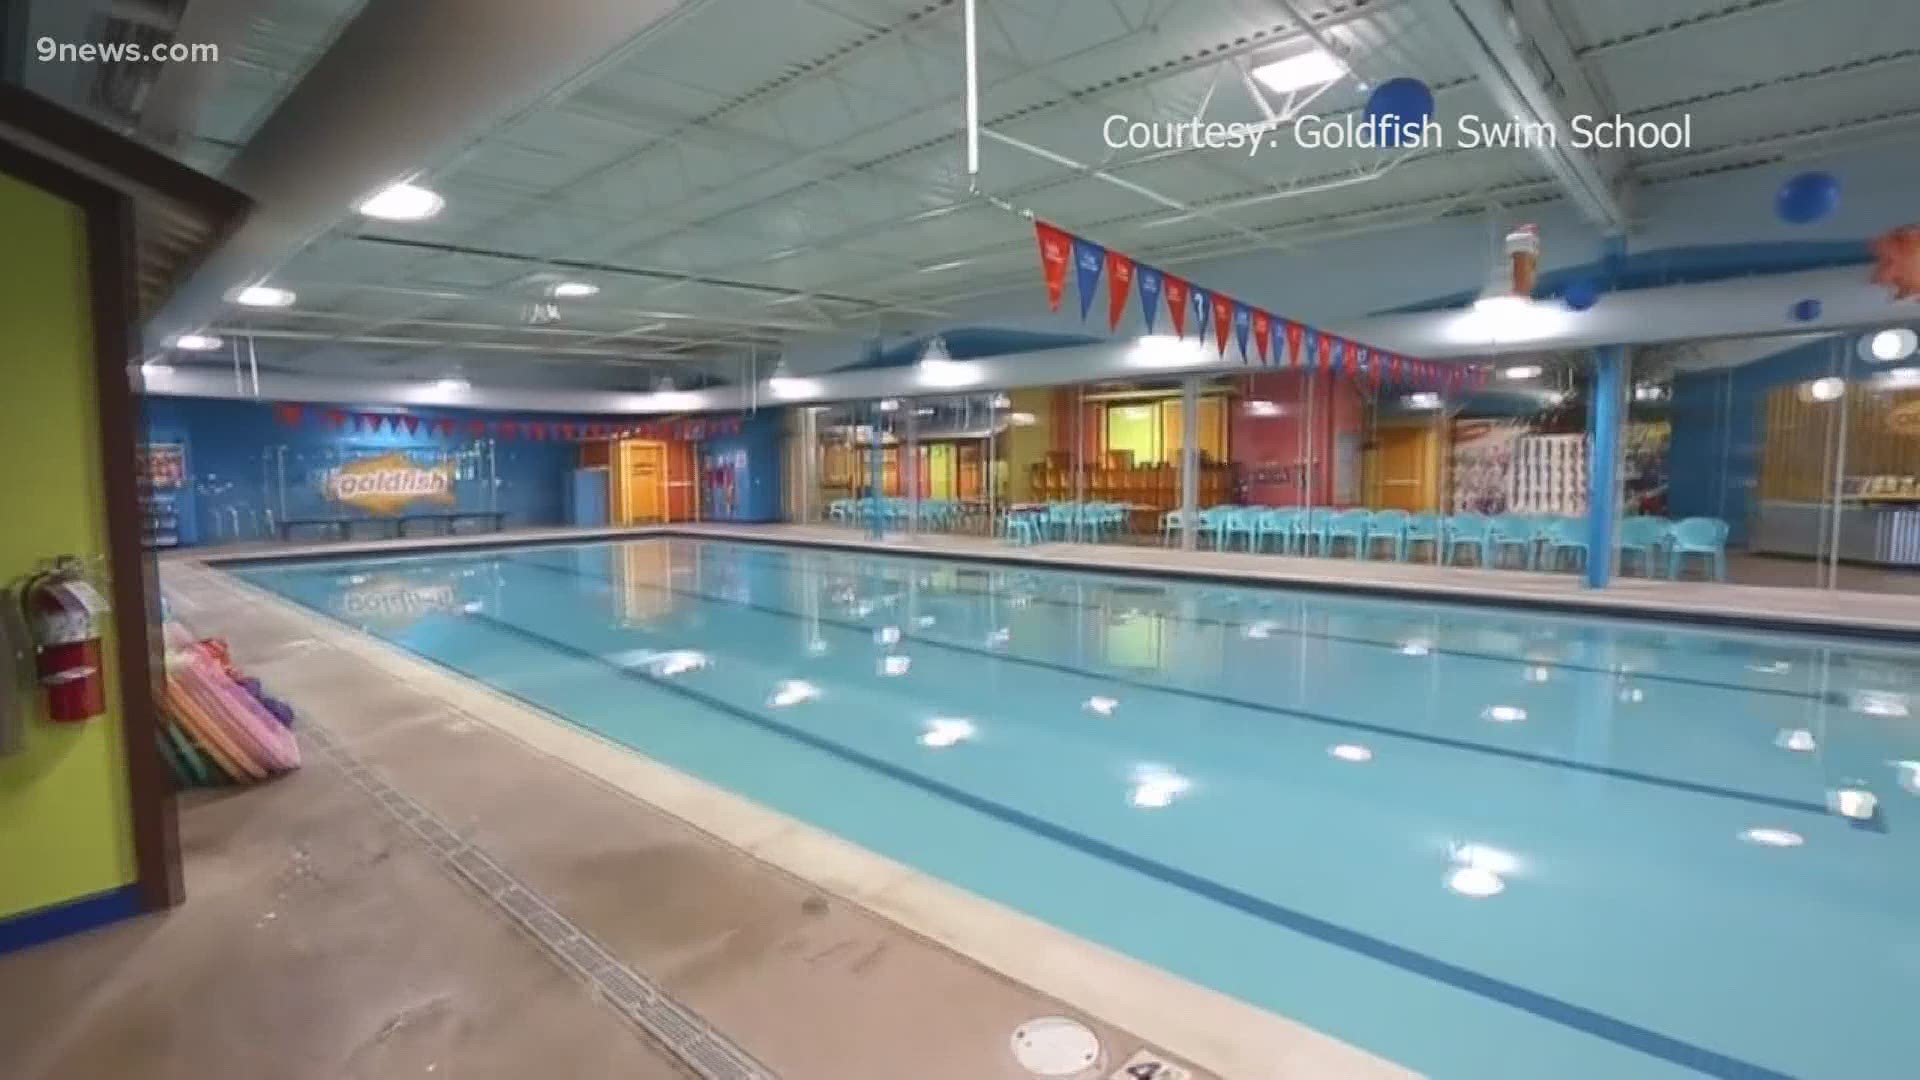 Goldfish Swim School is classified as a gym under public health orders.